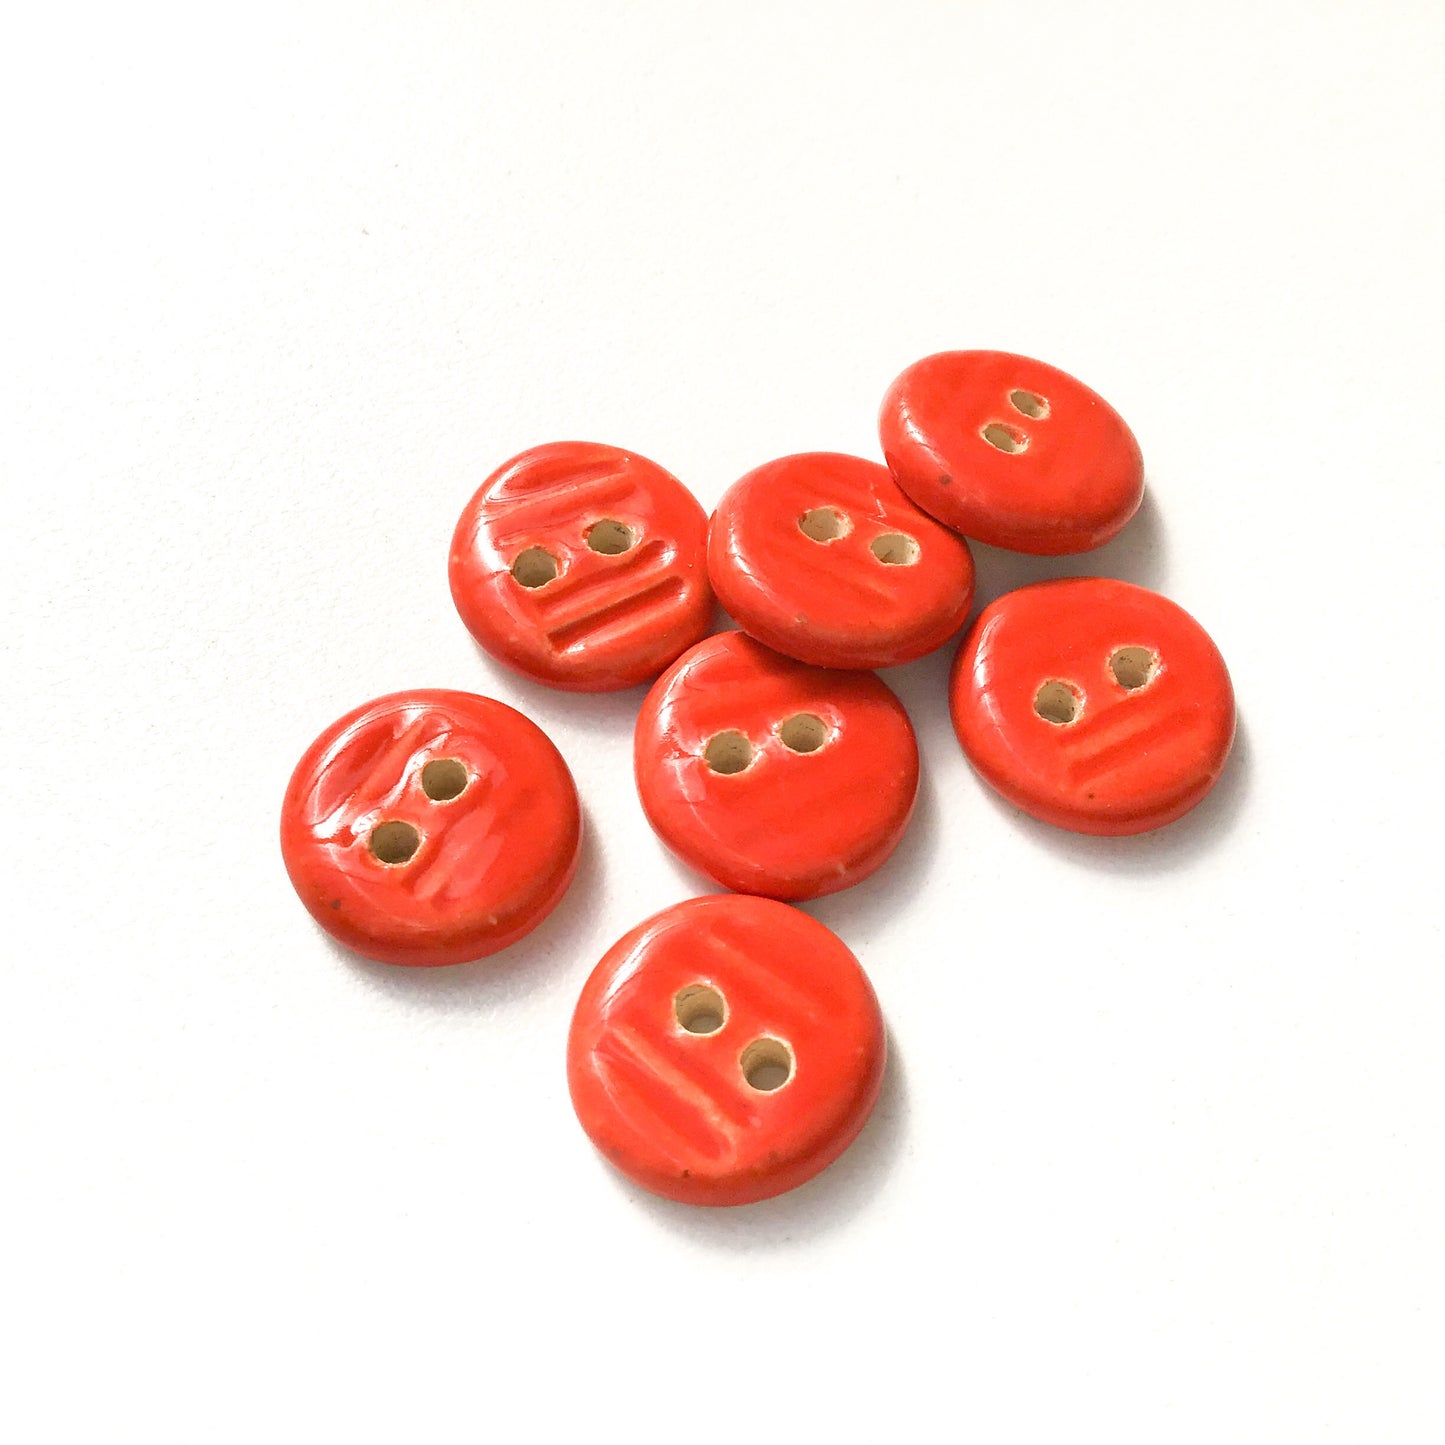 Reddish-Orange Ceramic Buttons - Small Round Ceramic Buttons - 9/16" - 7 Pack